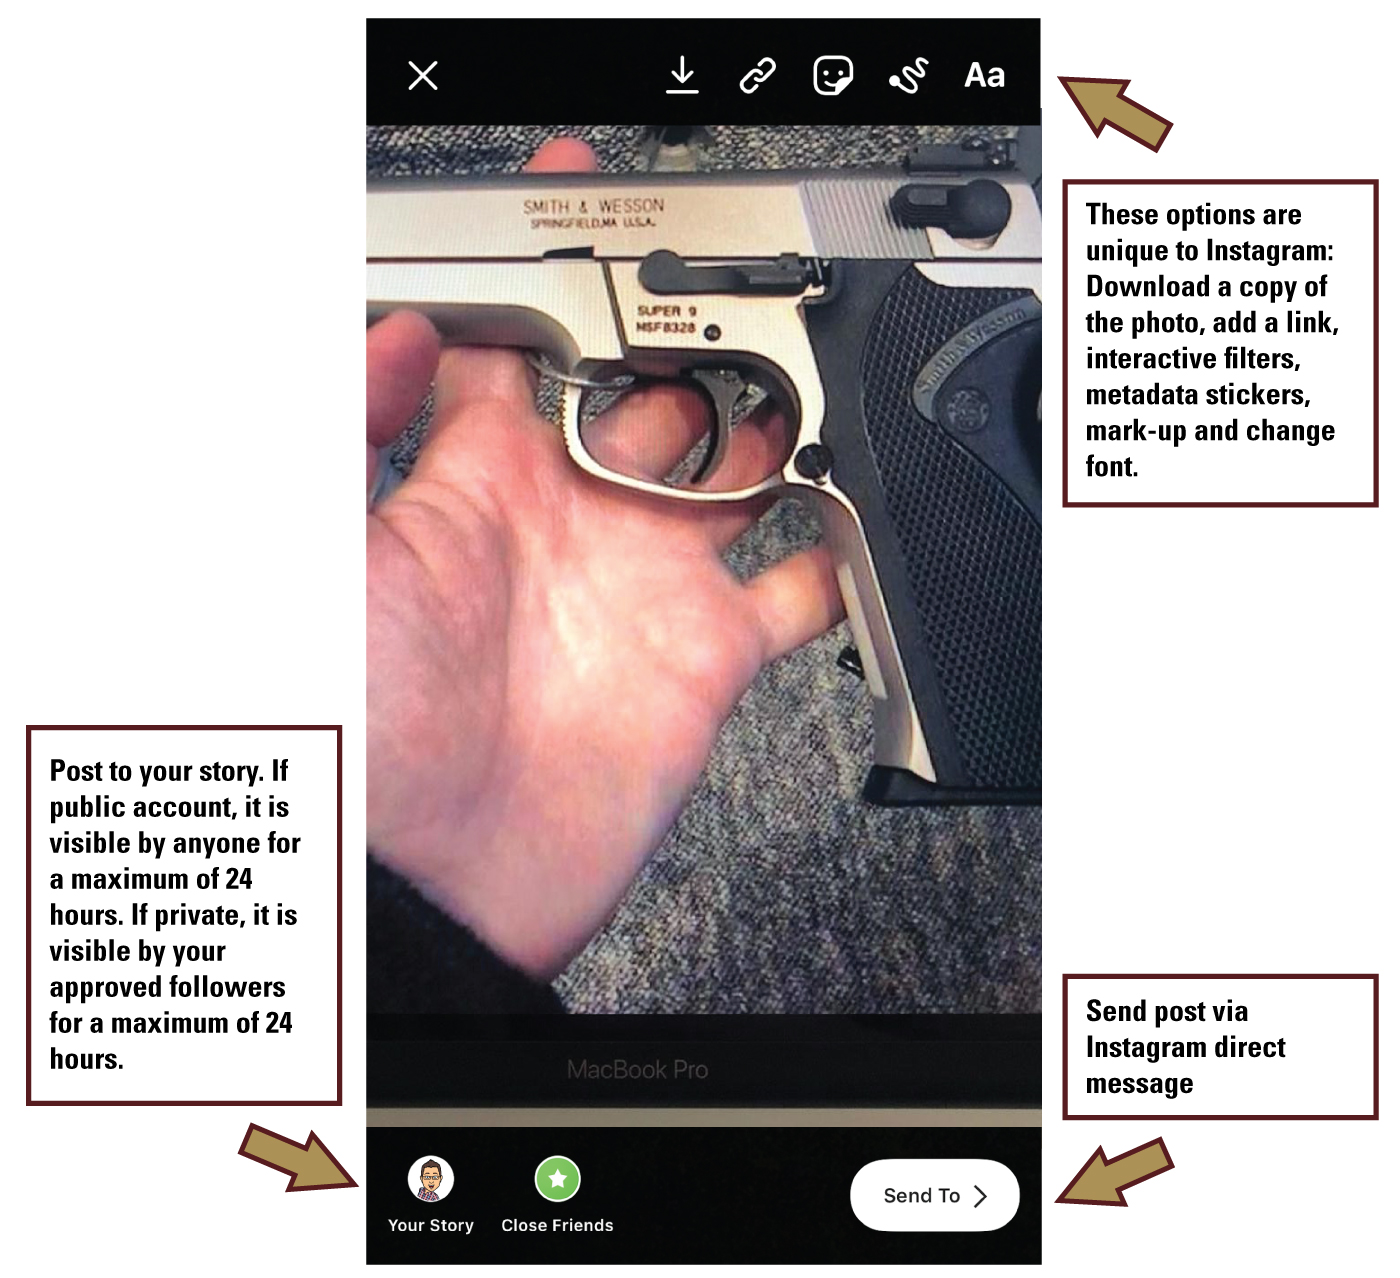 photo of gun on an Instagram story